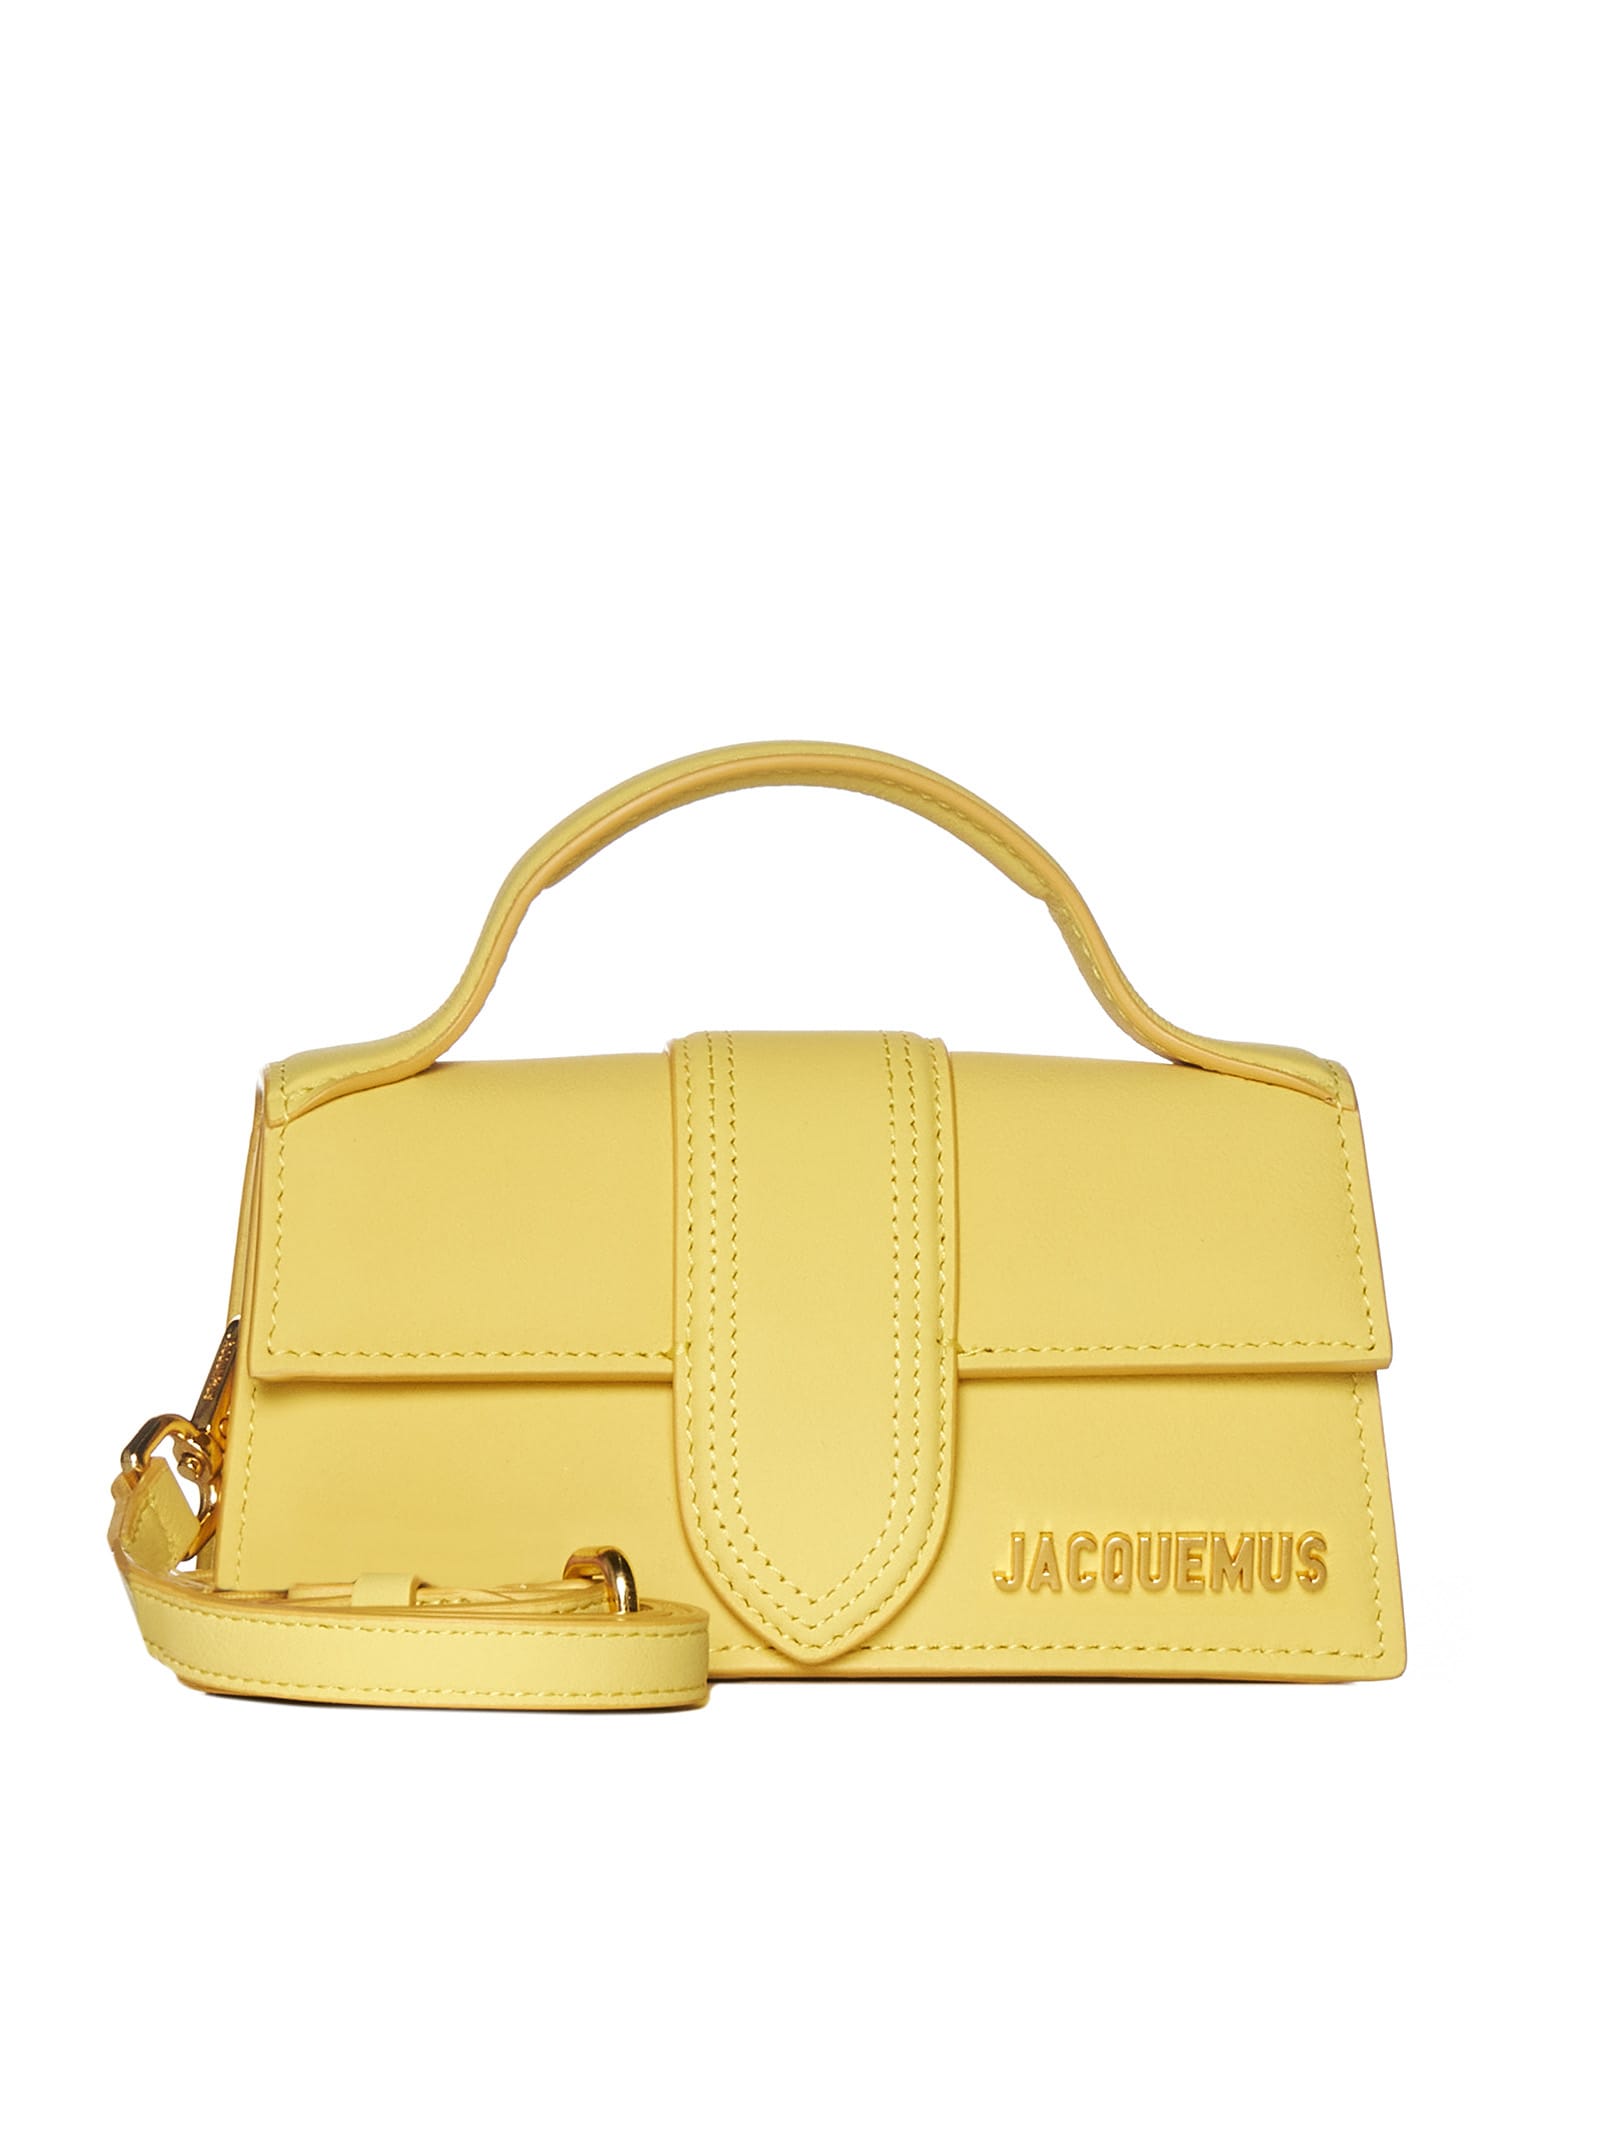 Jacquemus Shoulder Bag